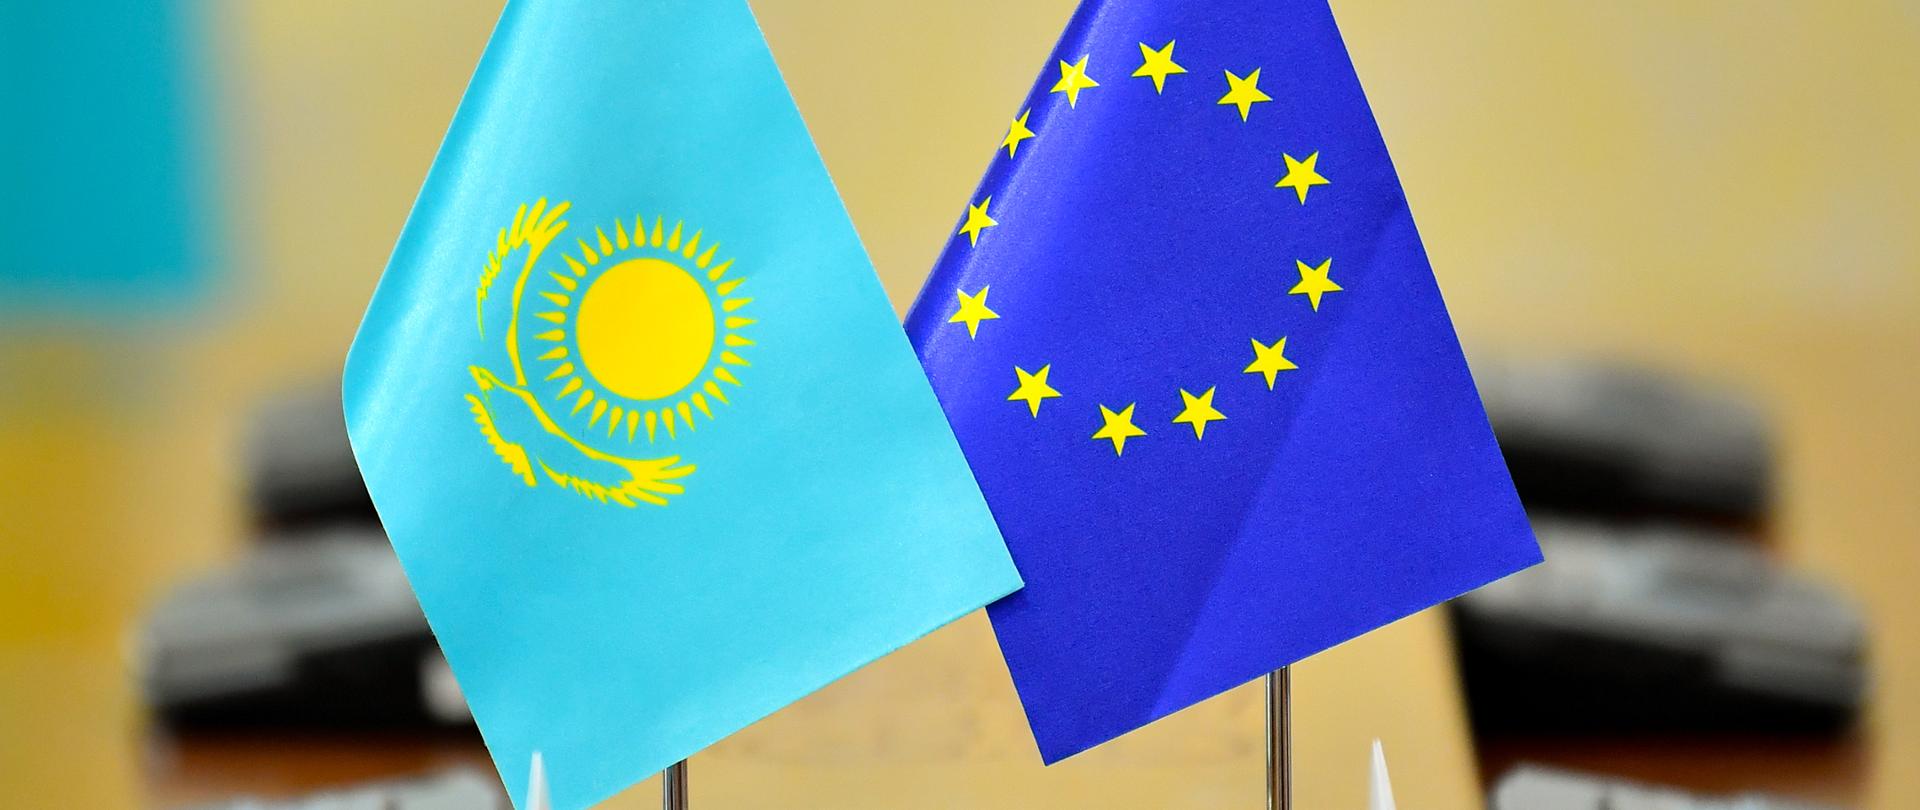 meeting of kazakhstan and the eu, kazakhstan and eu flag, europe, union, eu, blue, symbol, european union, banner, stars, yellow, euro, wind, country, star, nation, isolated, white, national, sky, wav